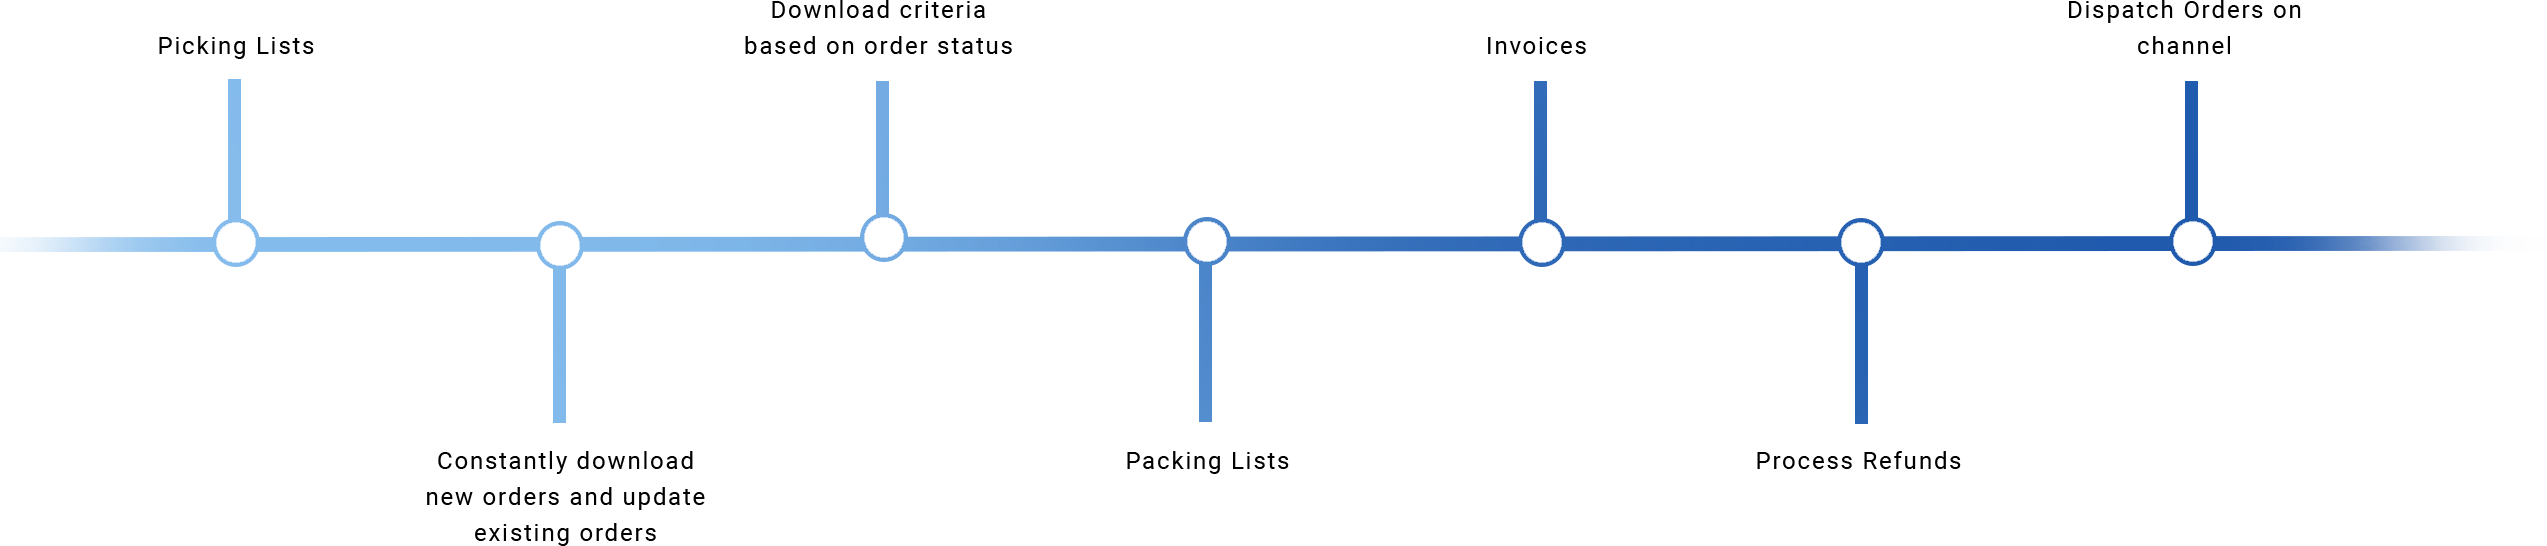 Feature Line Diagram 2